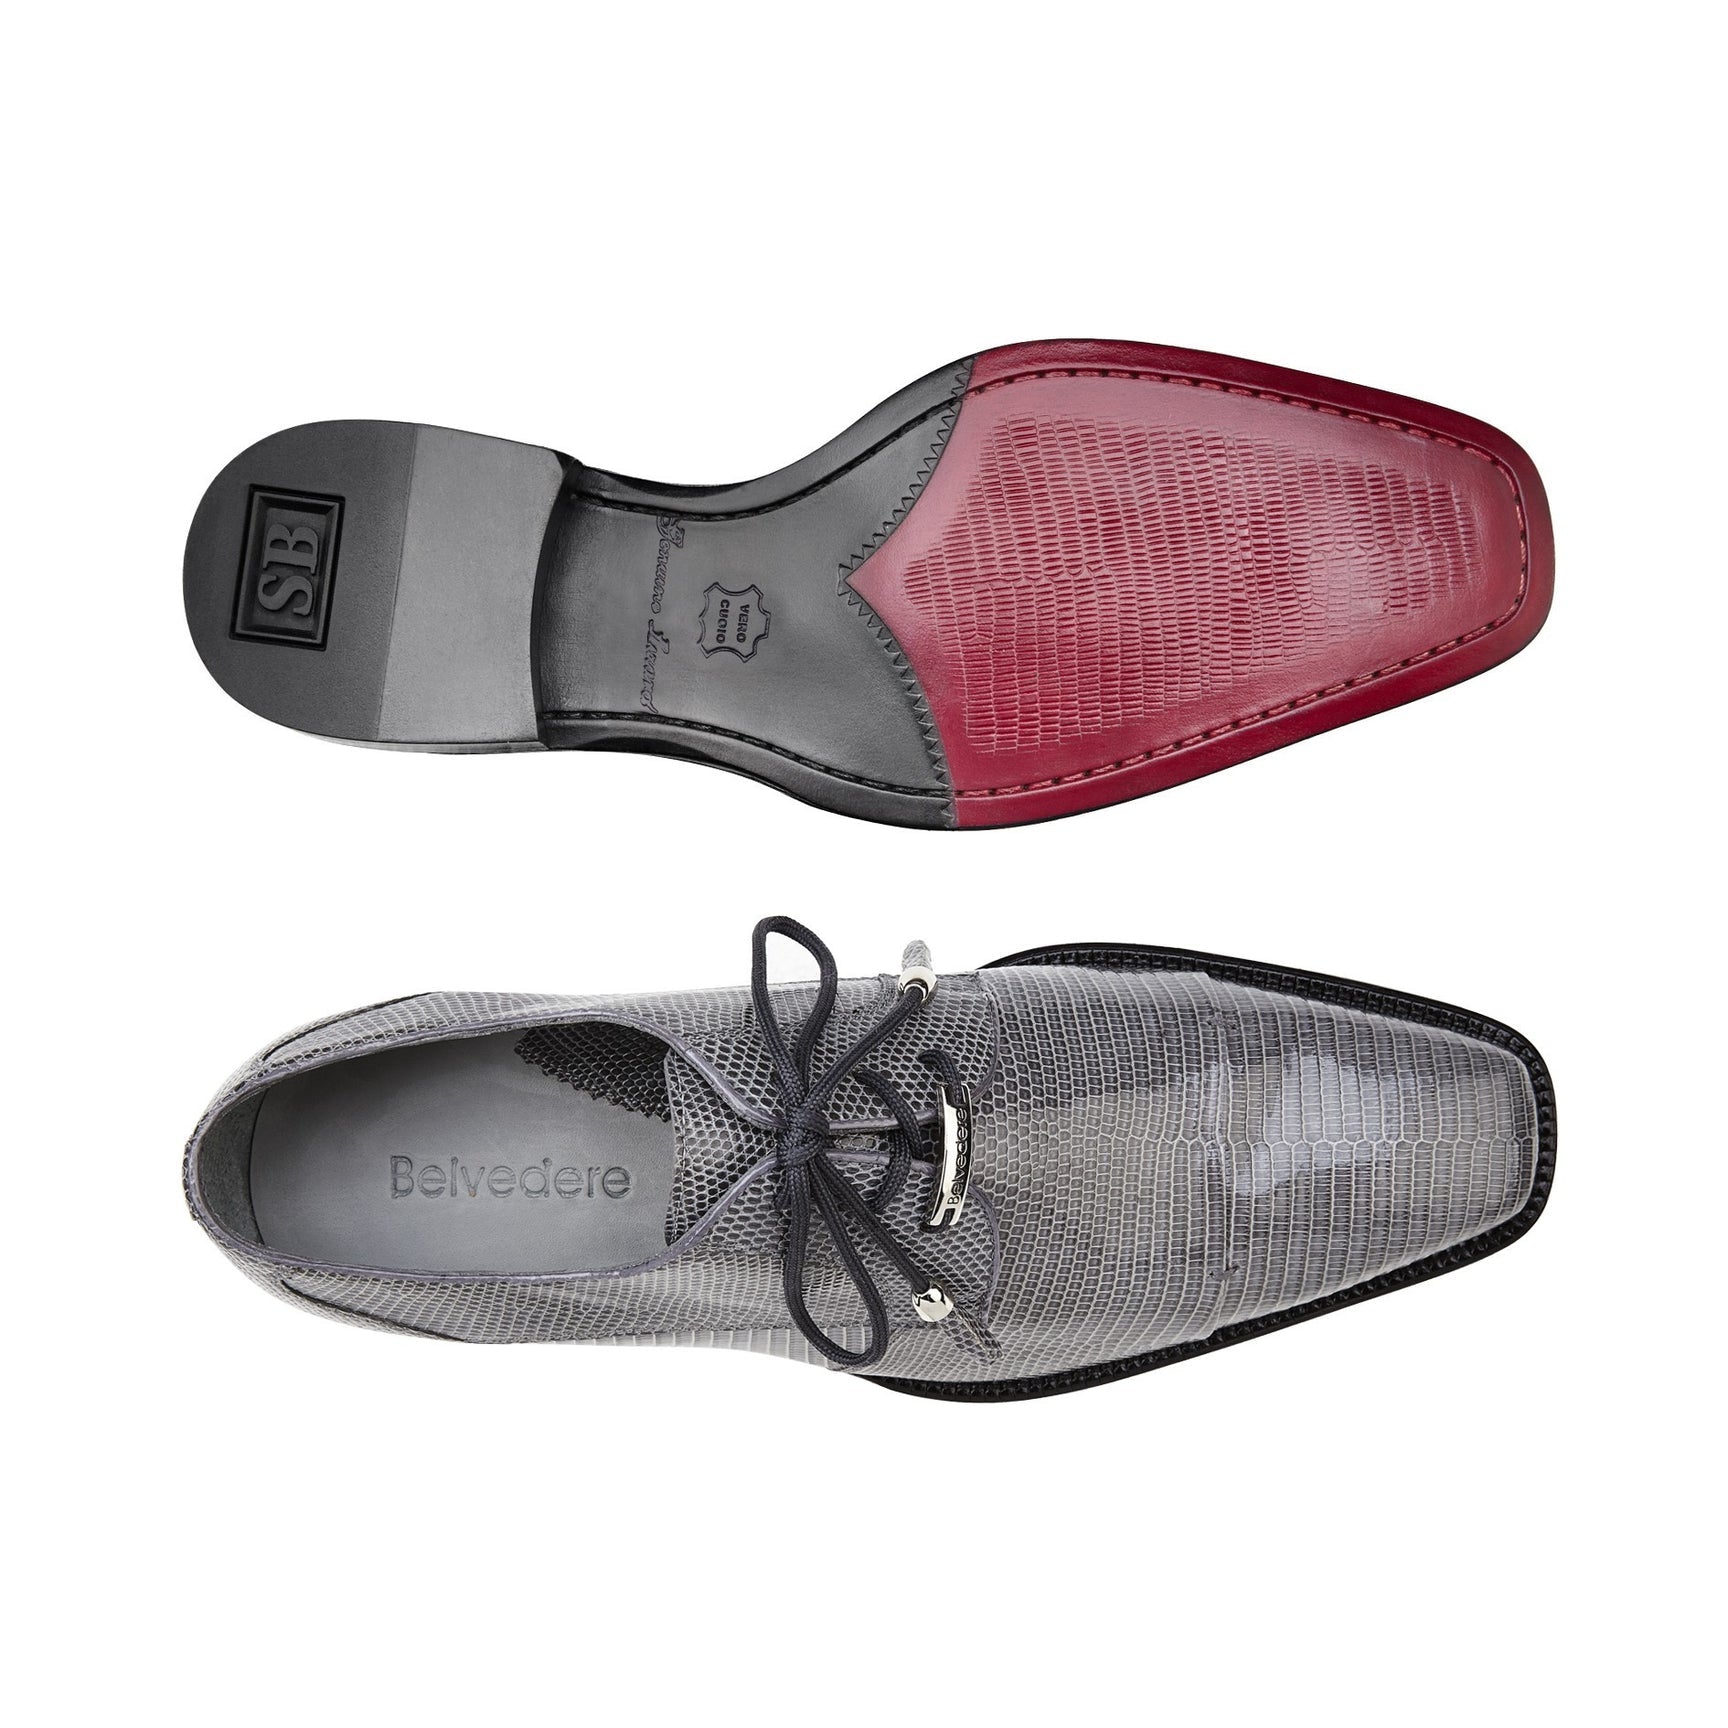 Belvedere Shoes Karmelo - Gray